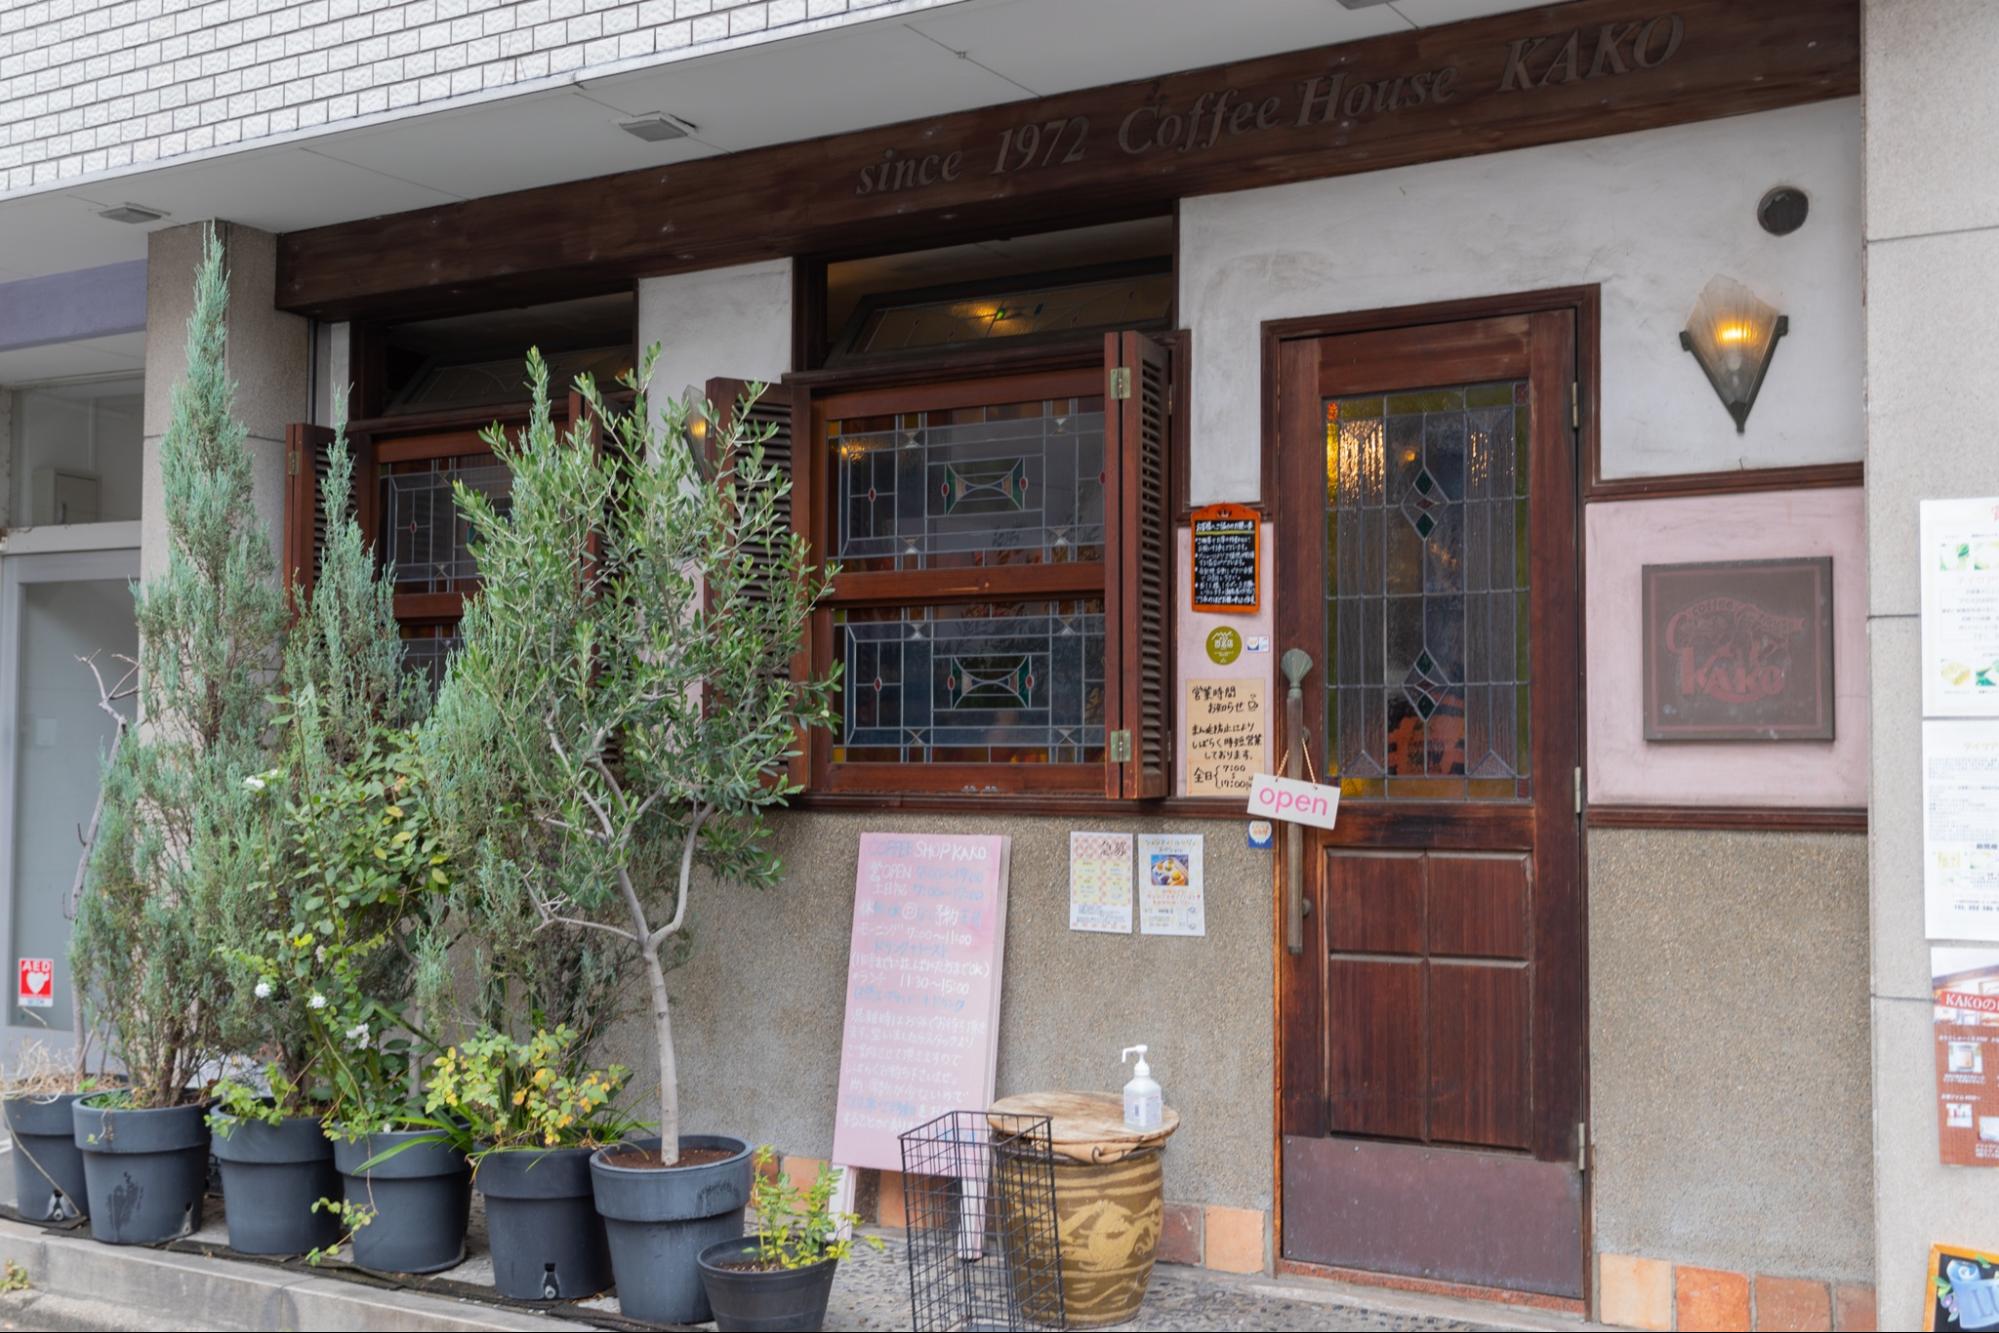 Cửa hàng chính Coffee House Kako Hanaguruma